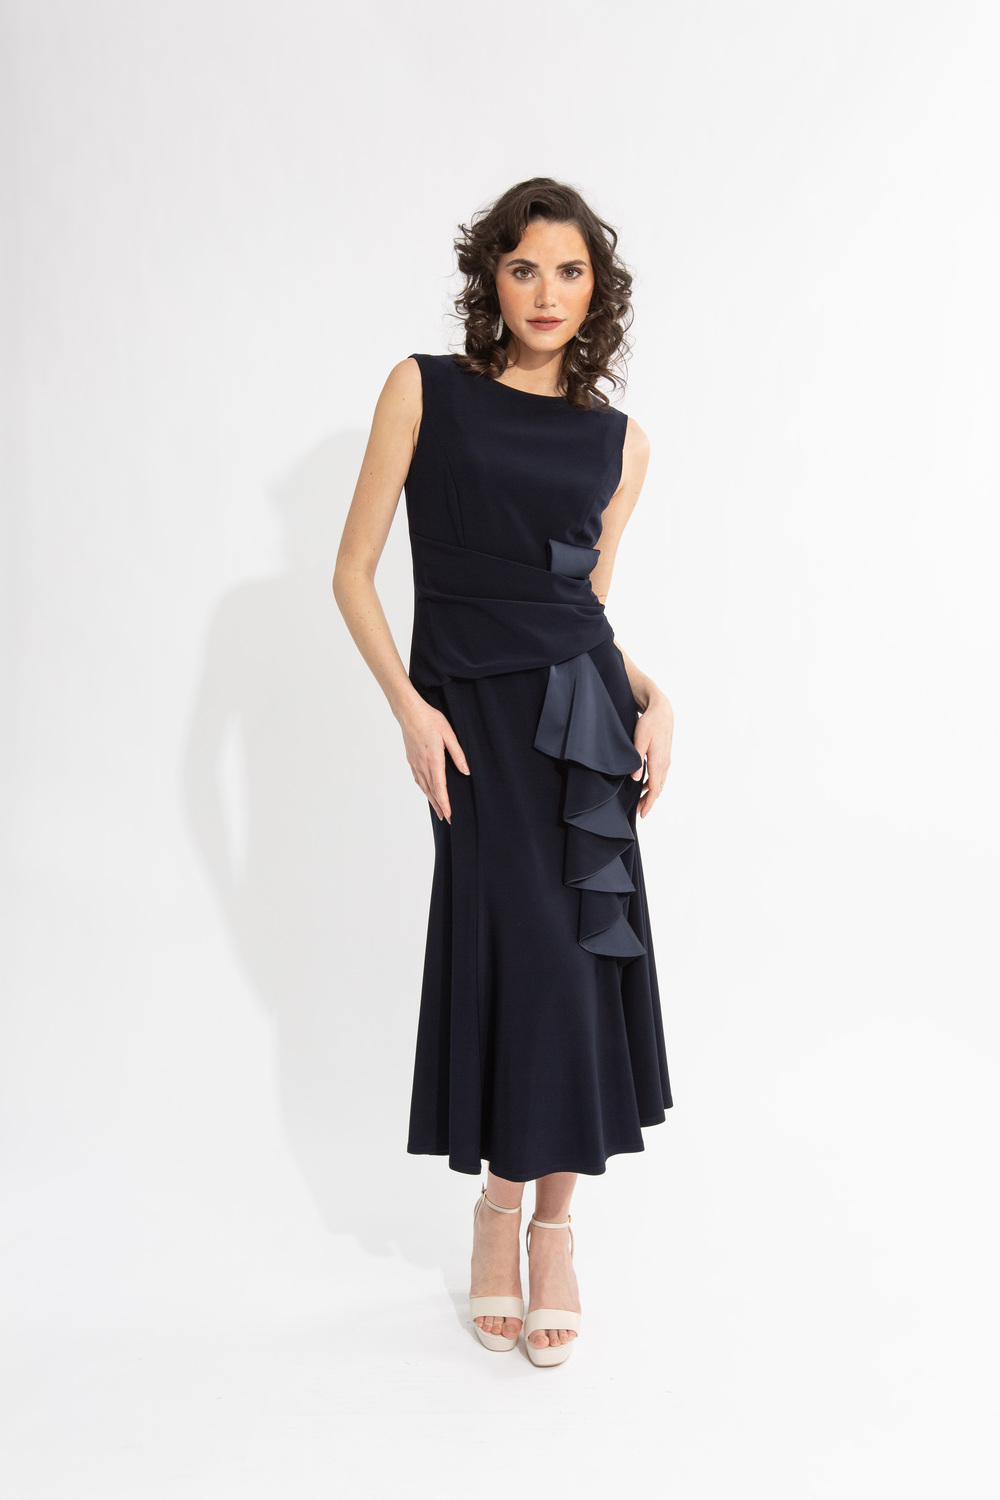 Robe style flamenco modèle 231719. Bleu Nuit